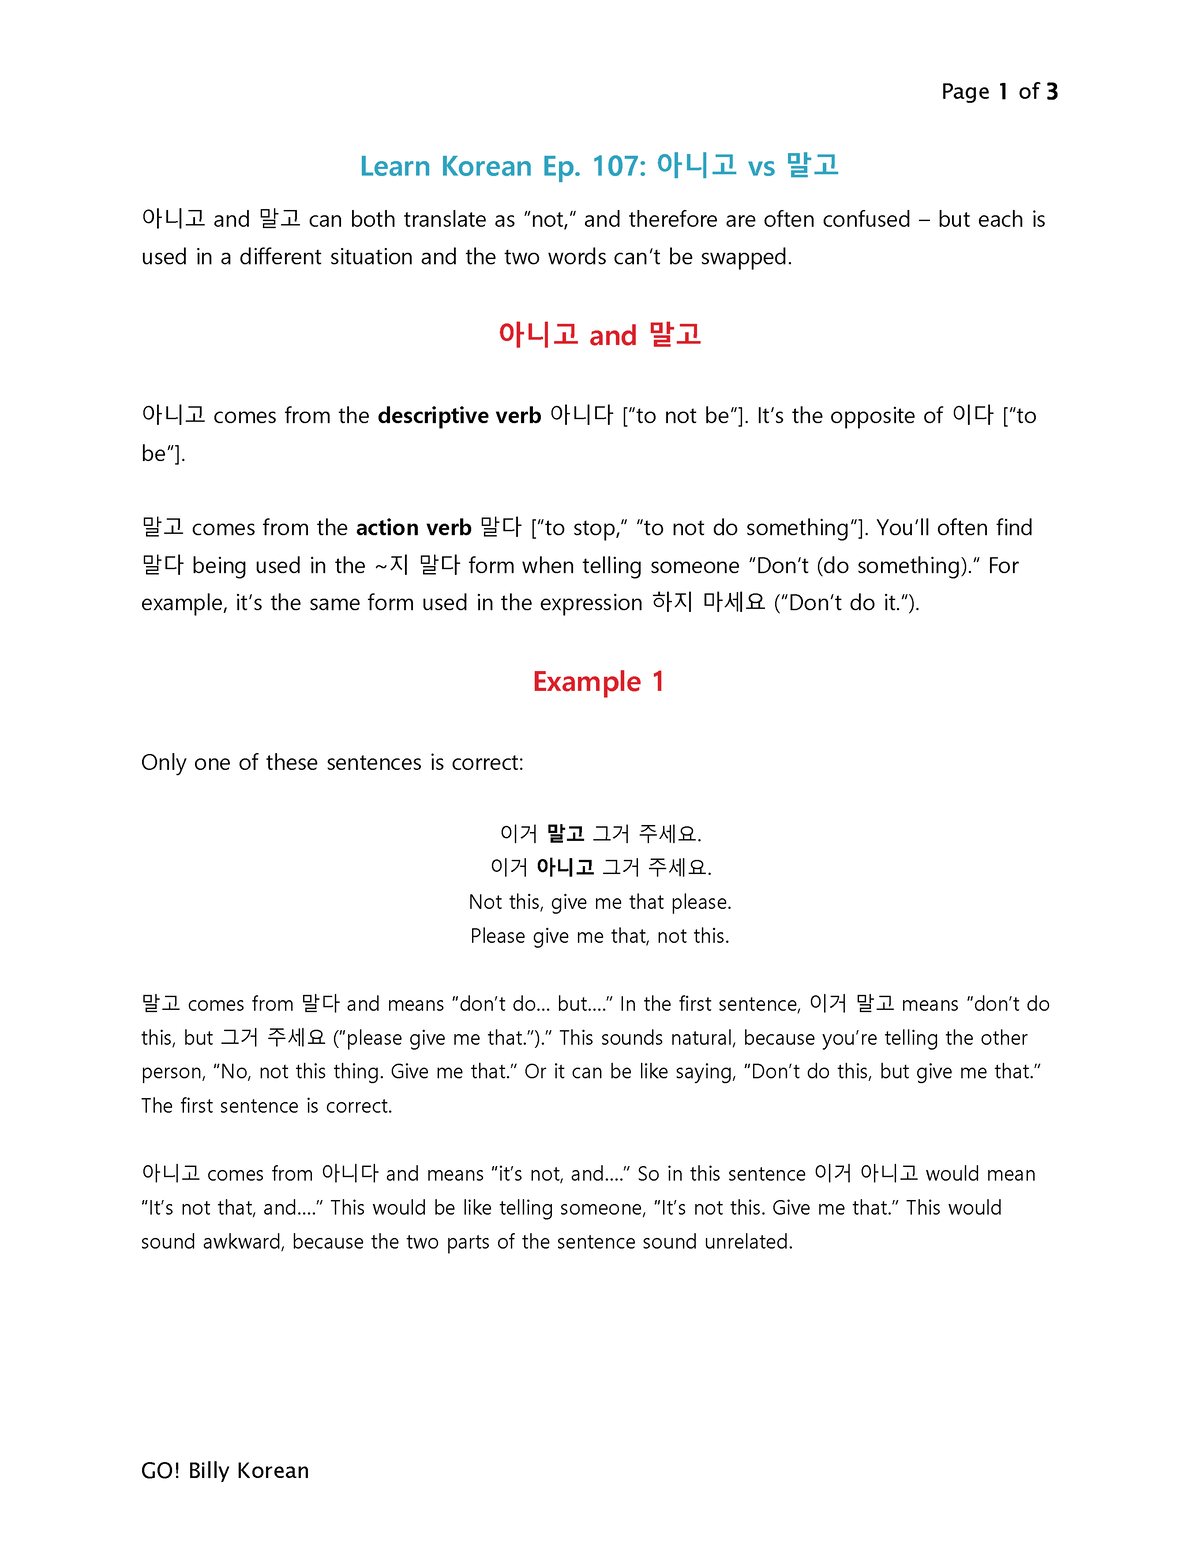 Go Billy Korean Episode 107 - Page 1 of 3 GO! Billy Korean Learn Korean ...